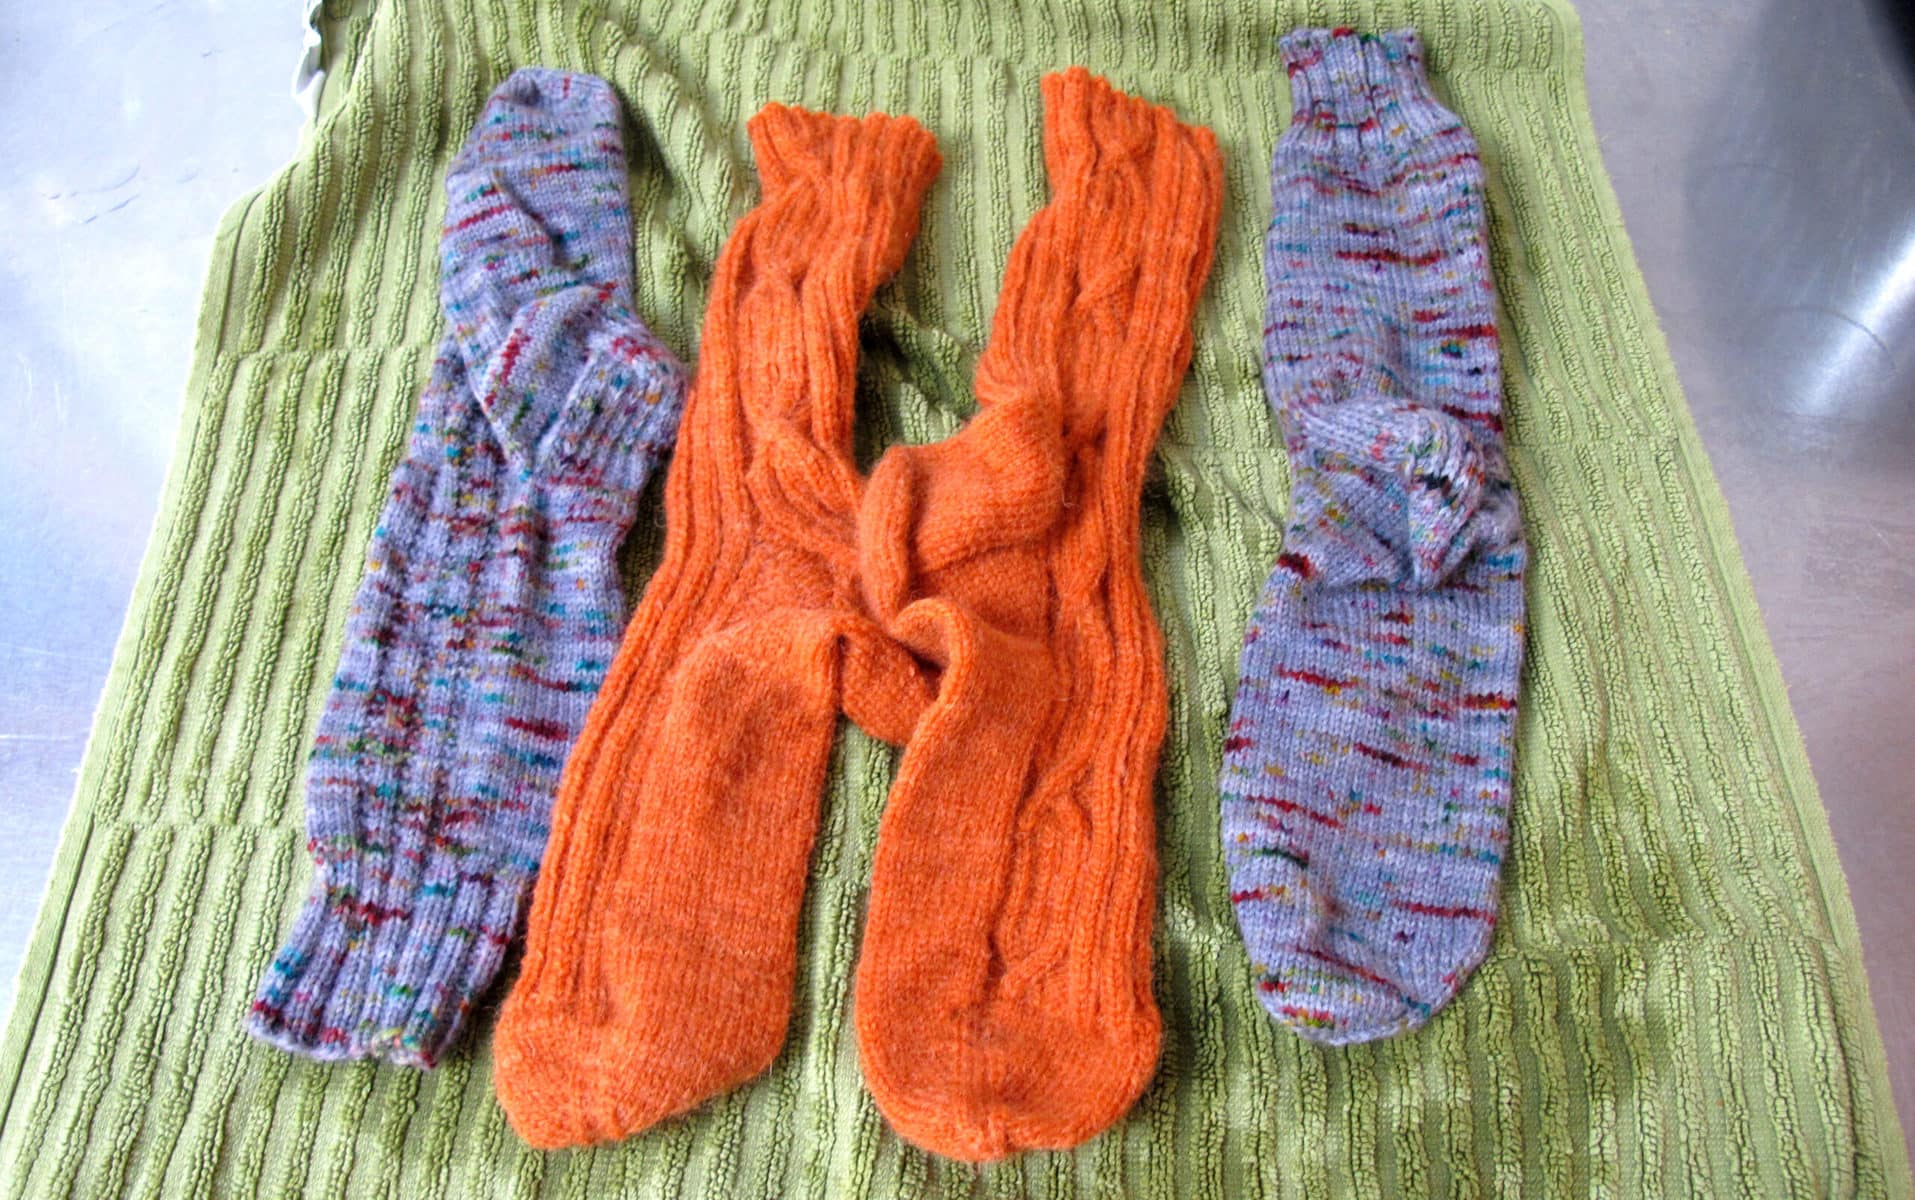 Image description: Four handknit socks laid flat on top of a light-green towel.